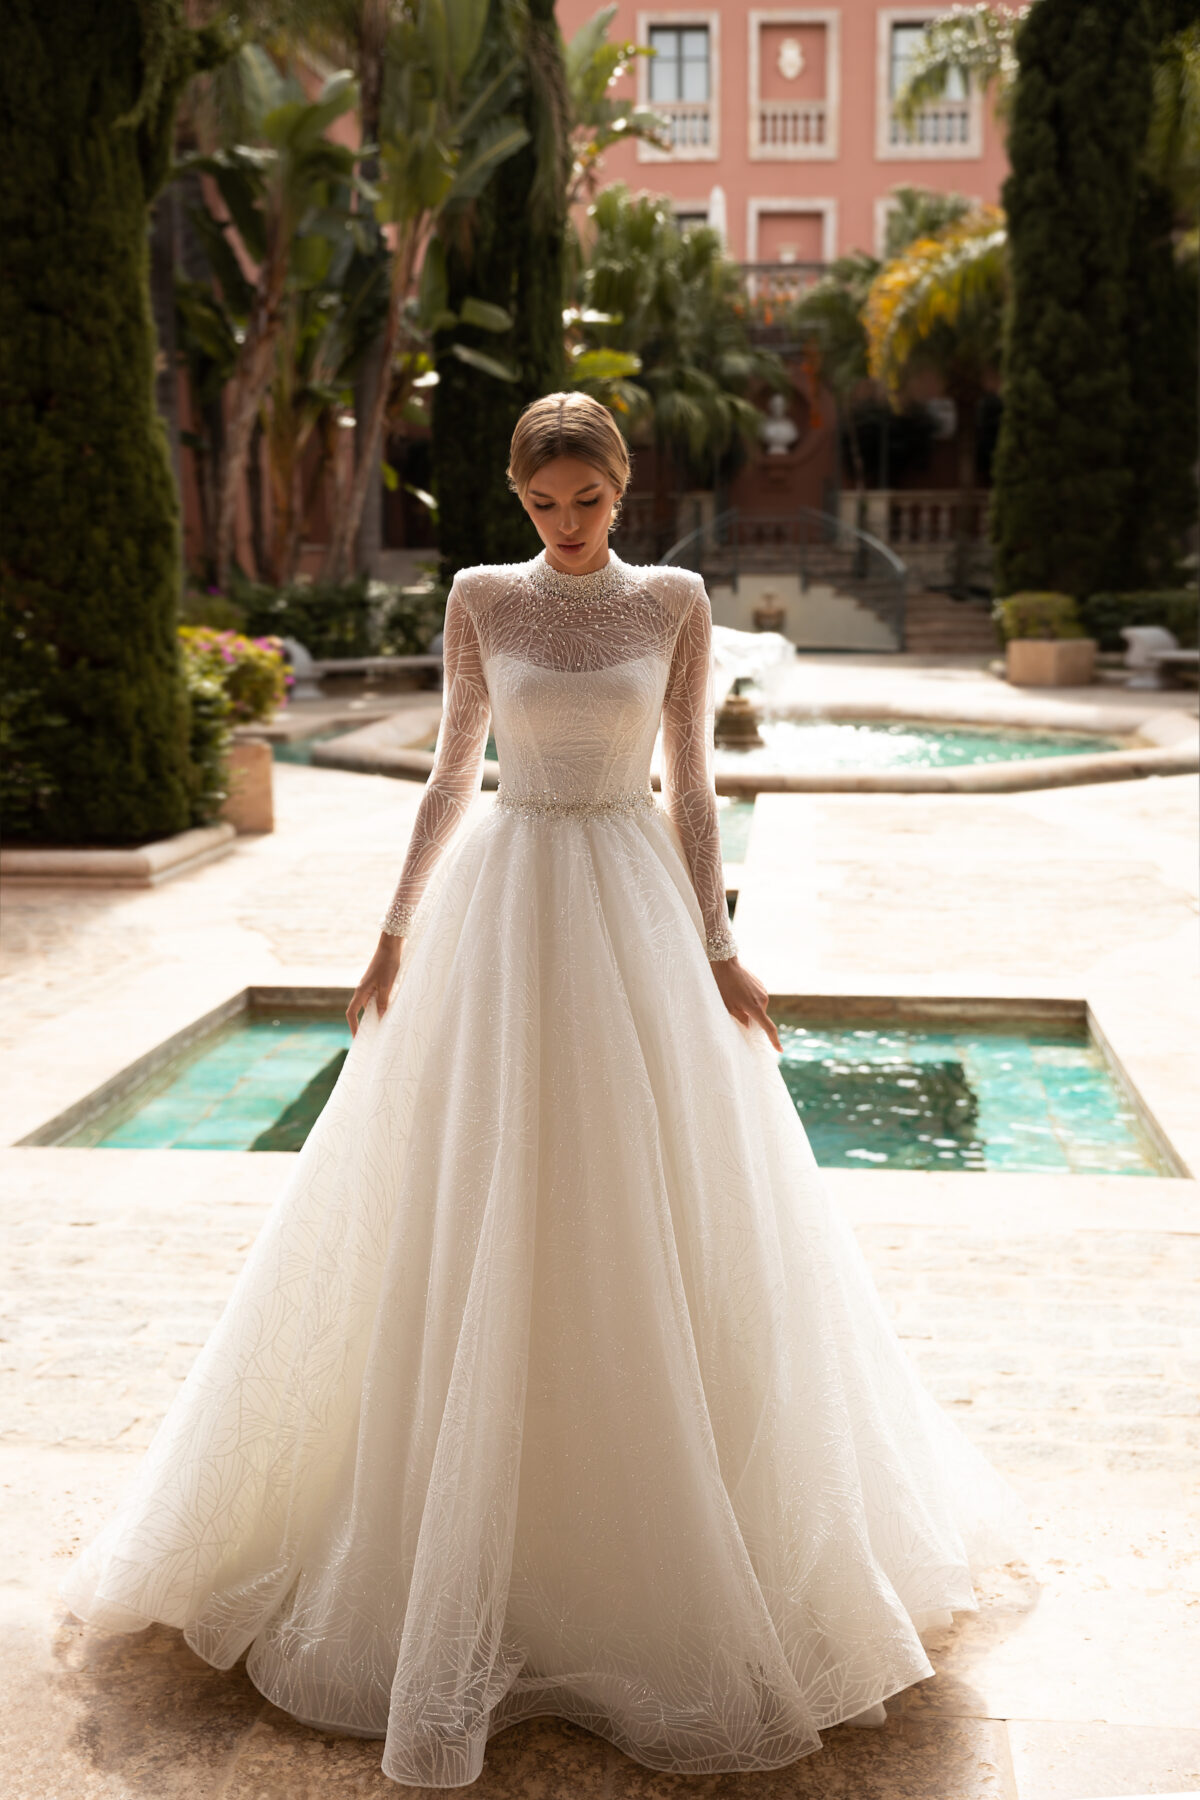 Frontera by Armonia wedding dress